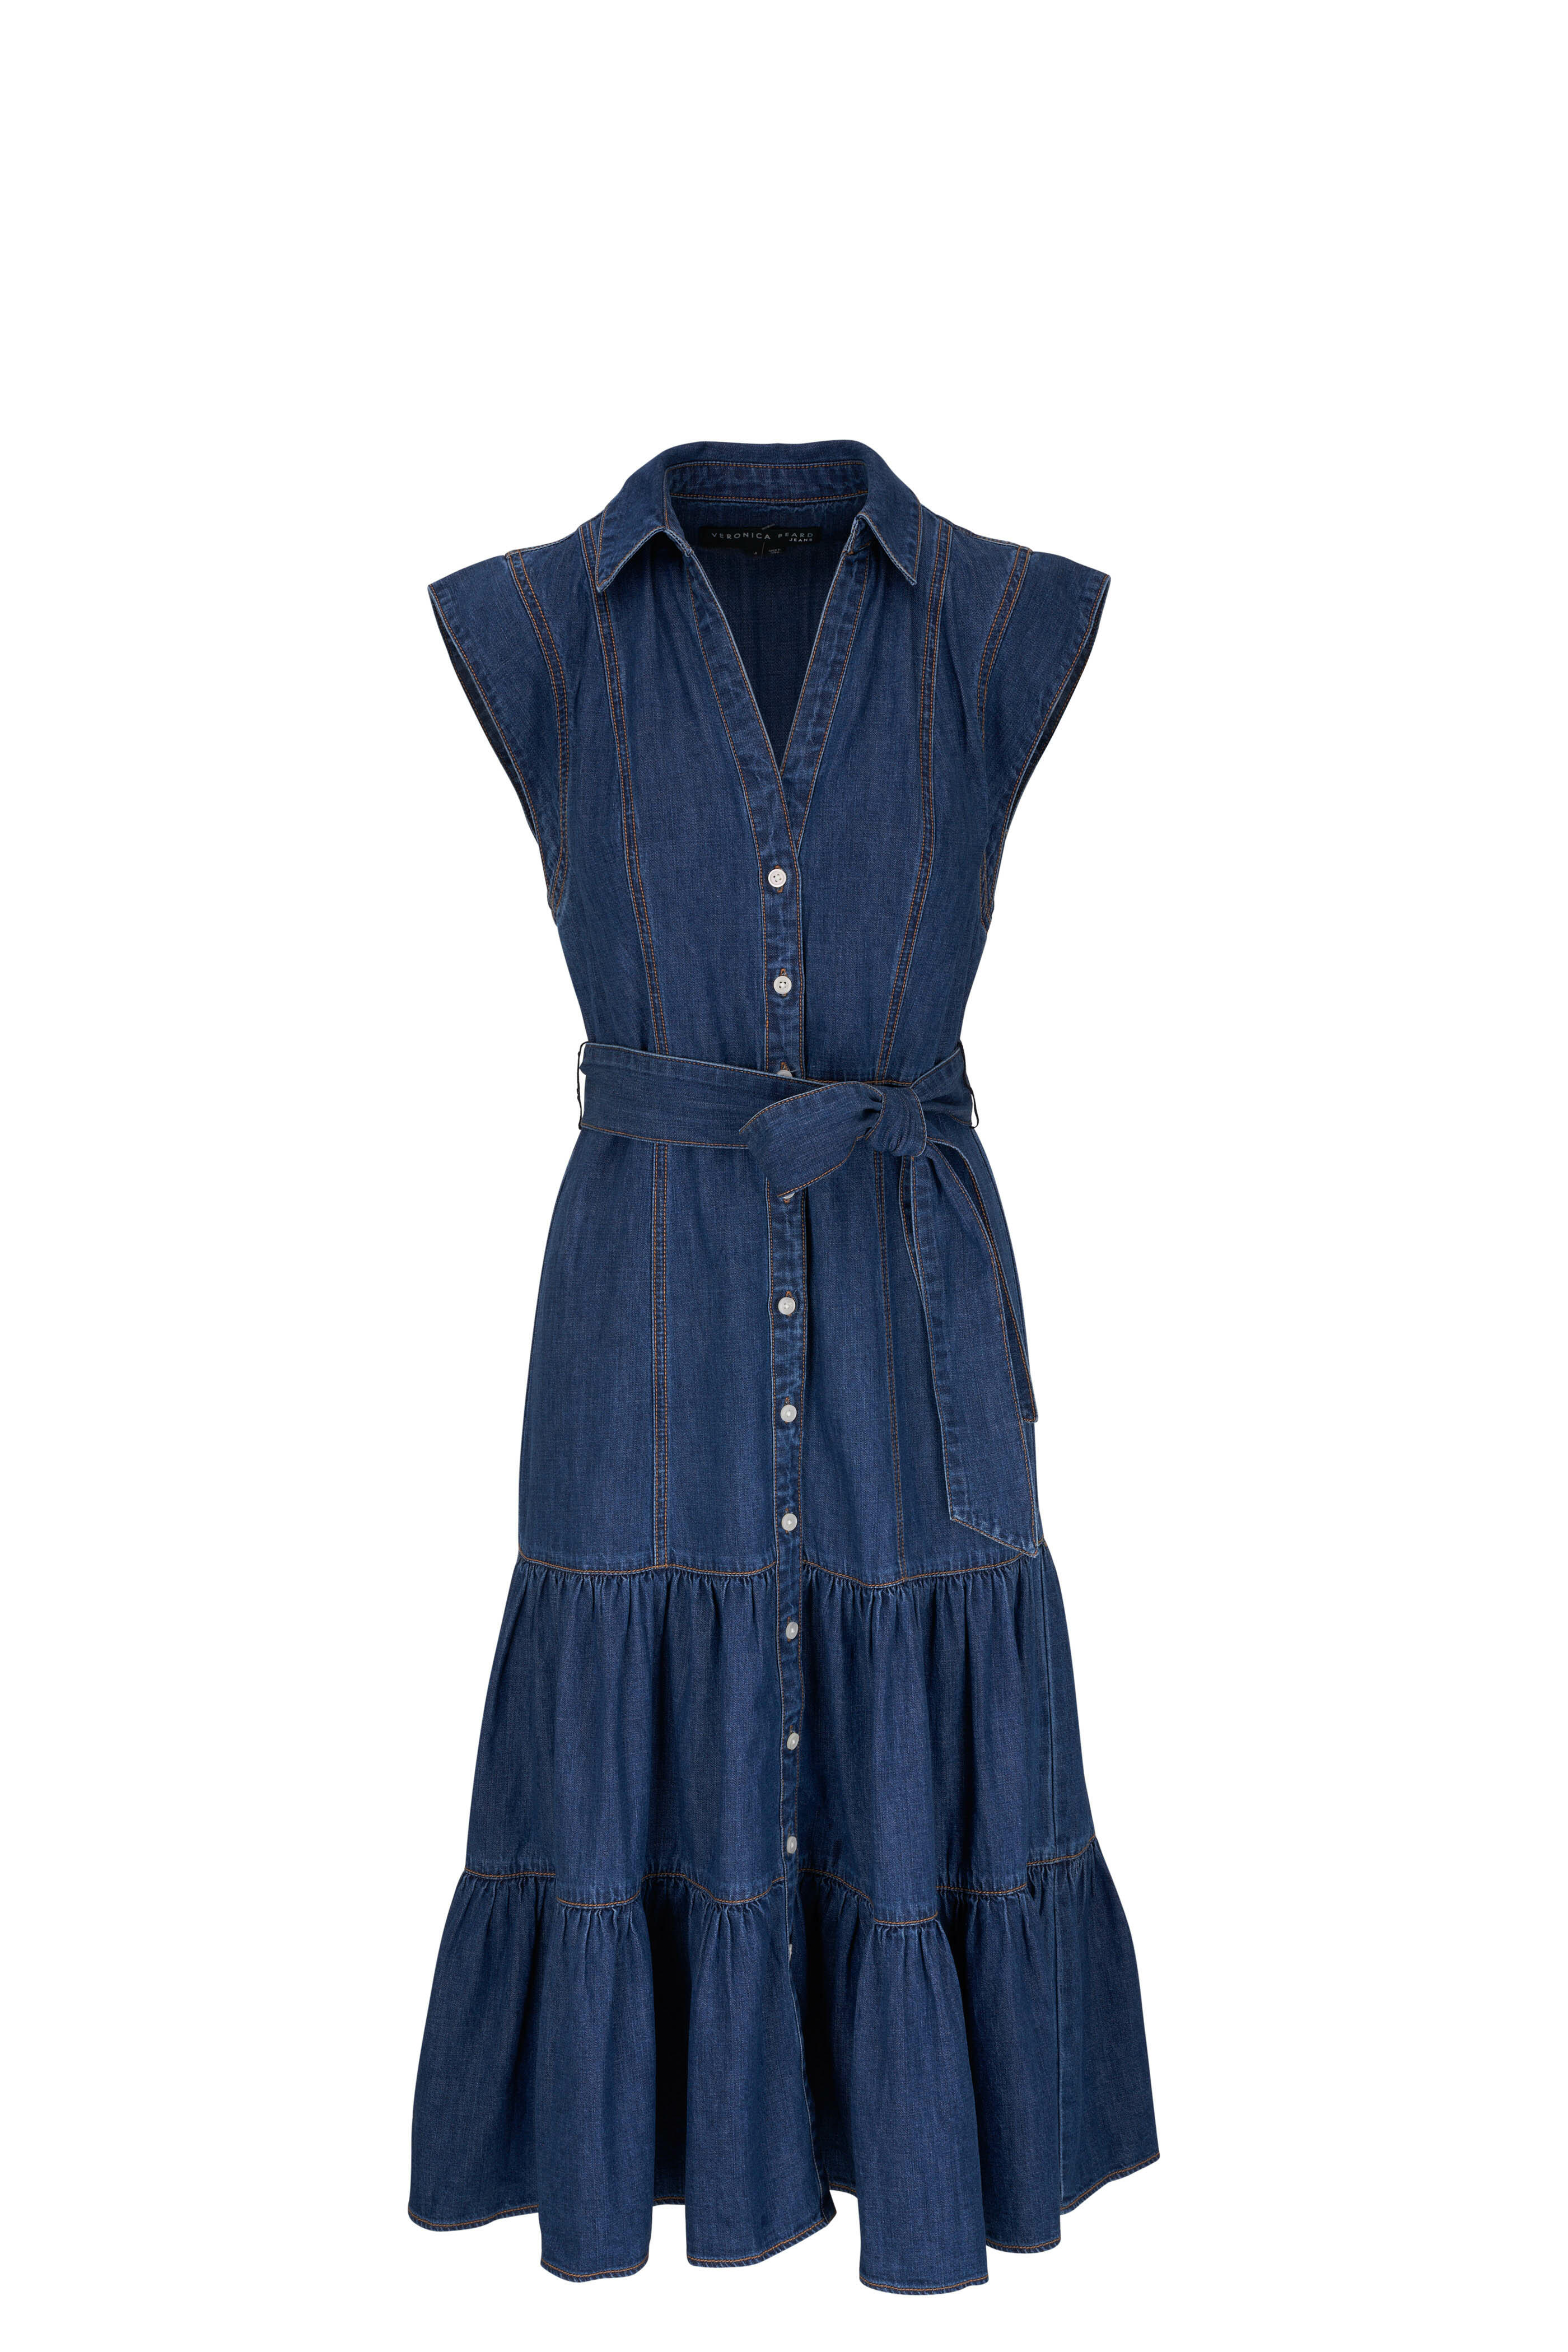 Veronica Beard - Arnetta Cornflower Blue Denim Dress